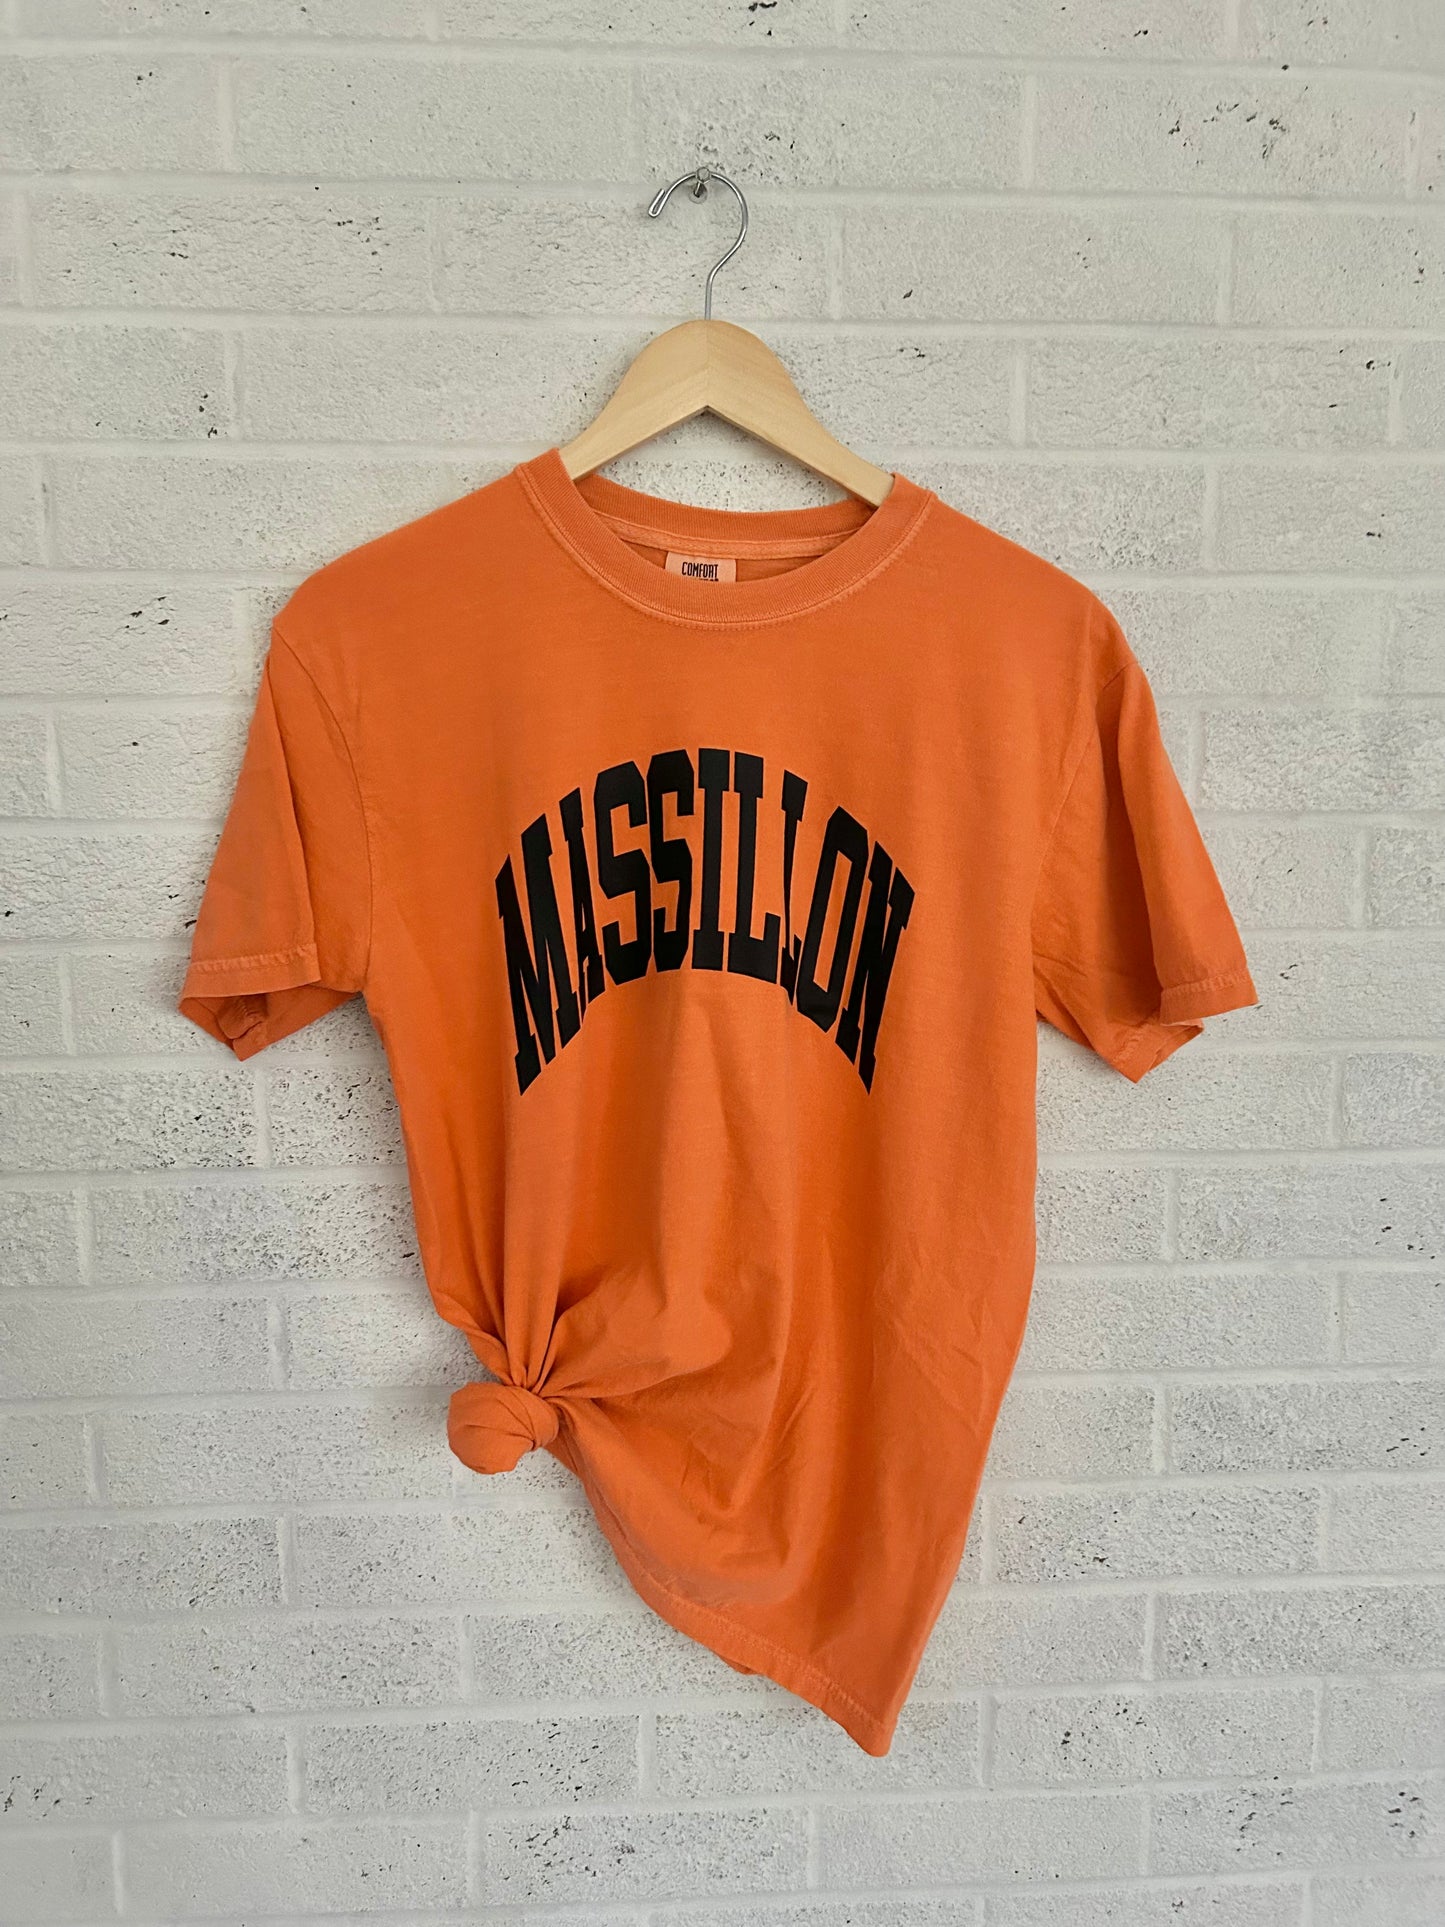 Massillon Orange Vintage T-shirt